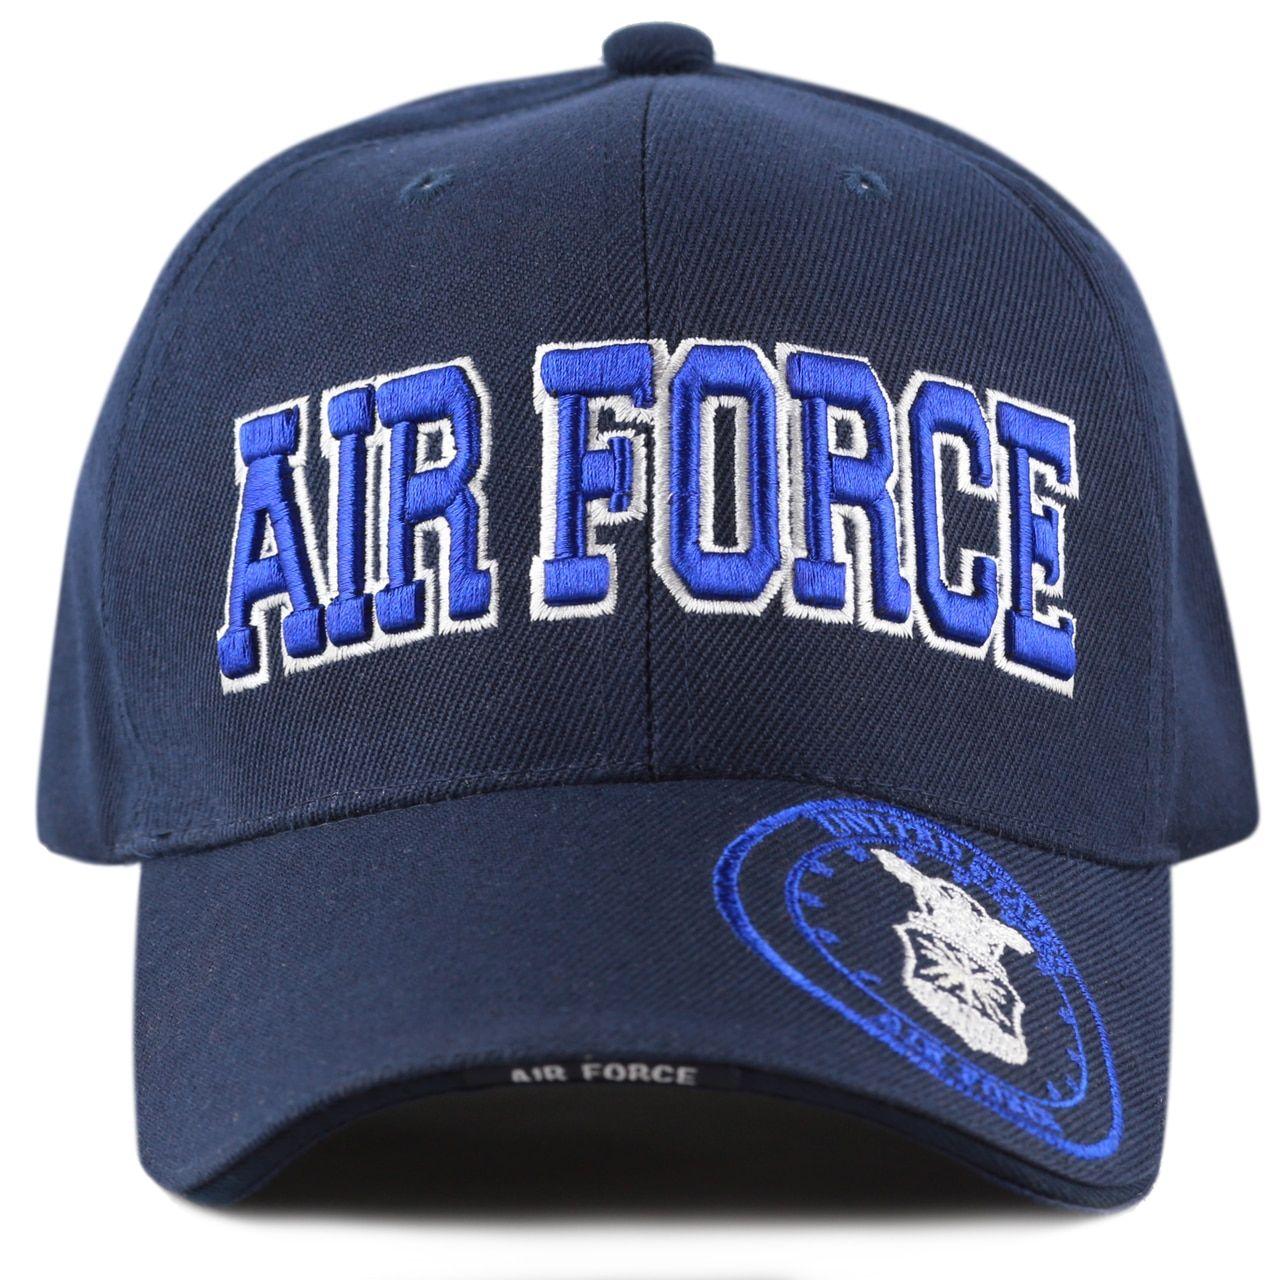 3D Air Force Logo - Air Force Veteran Cap